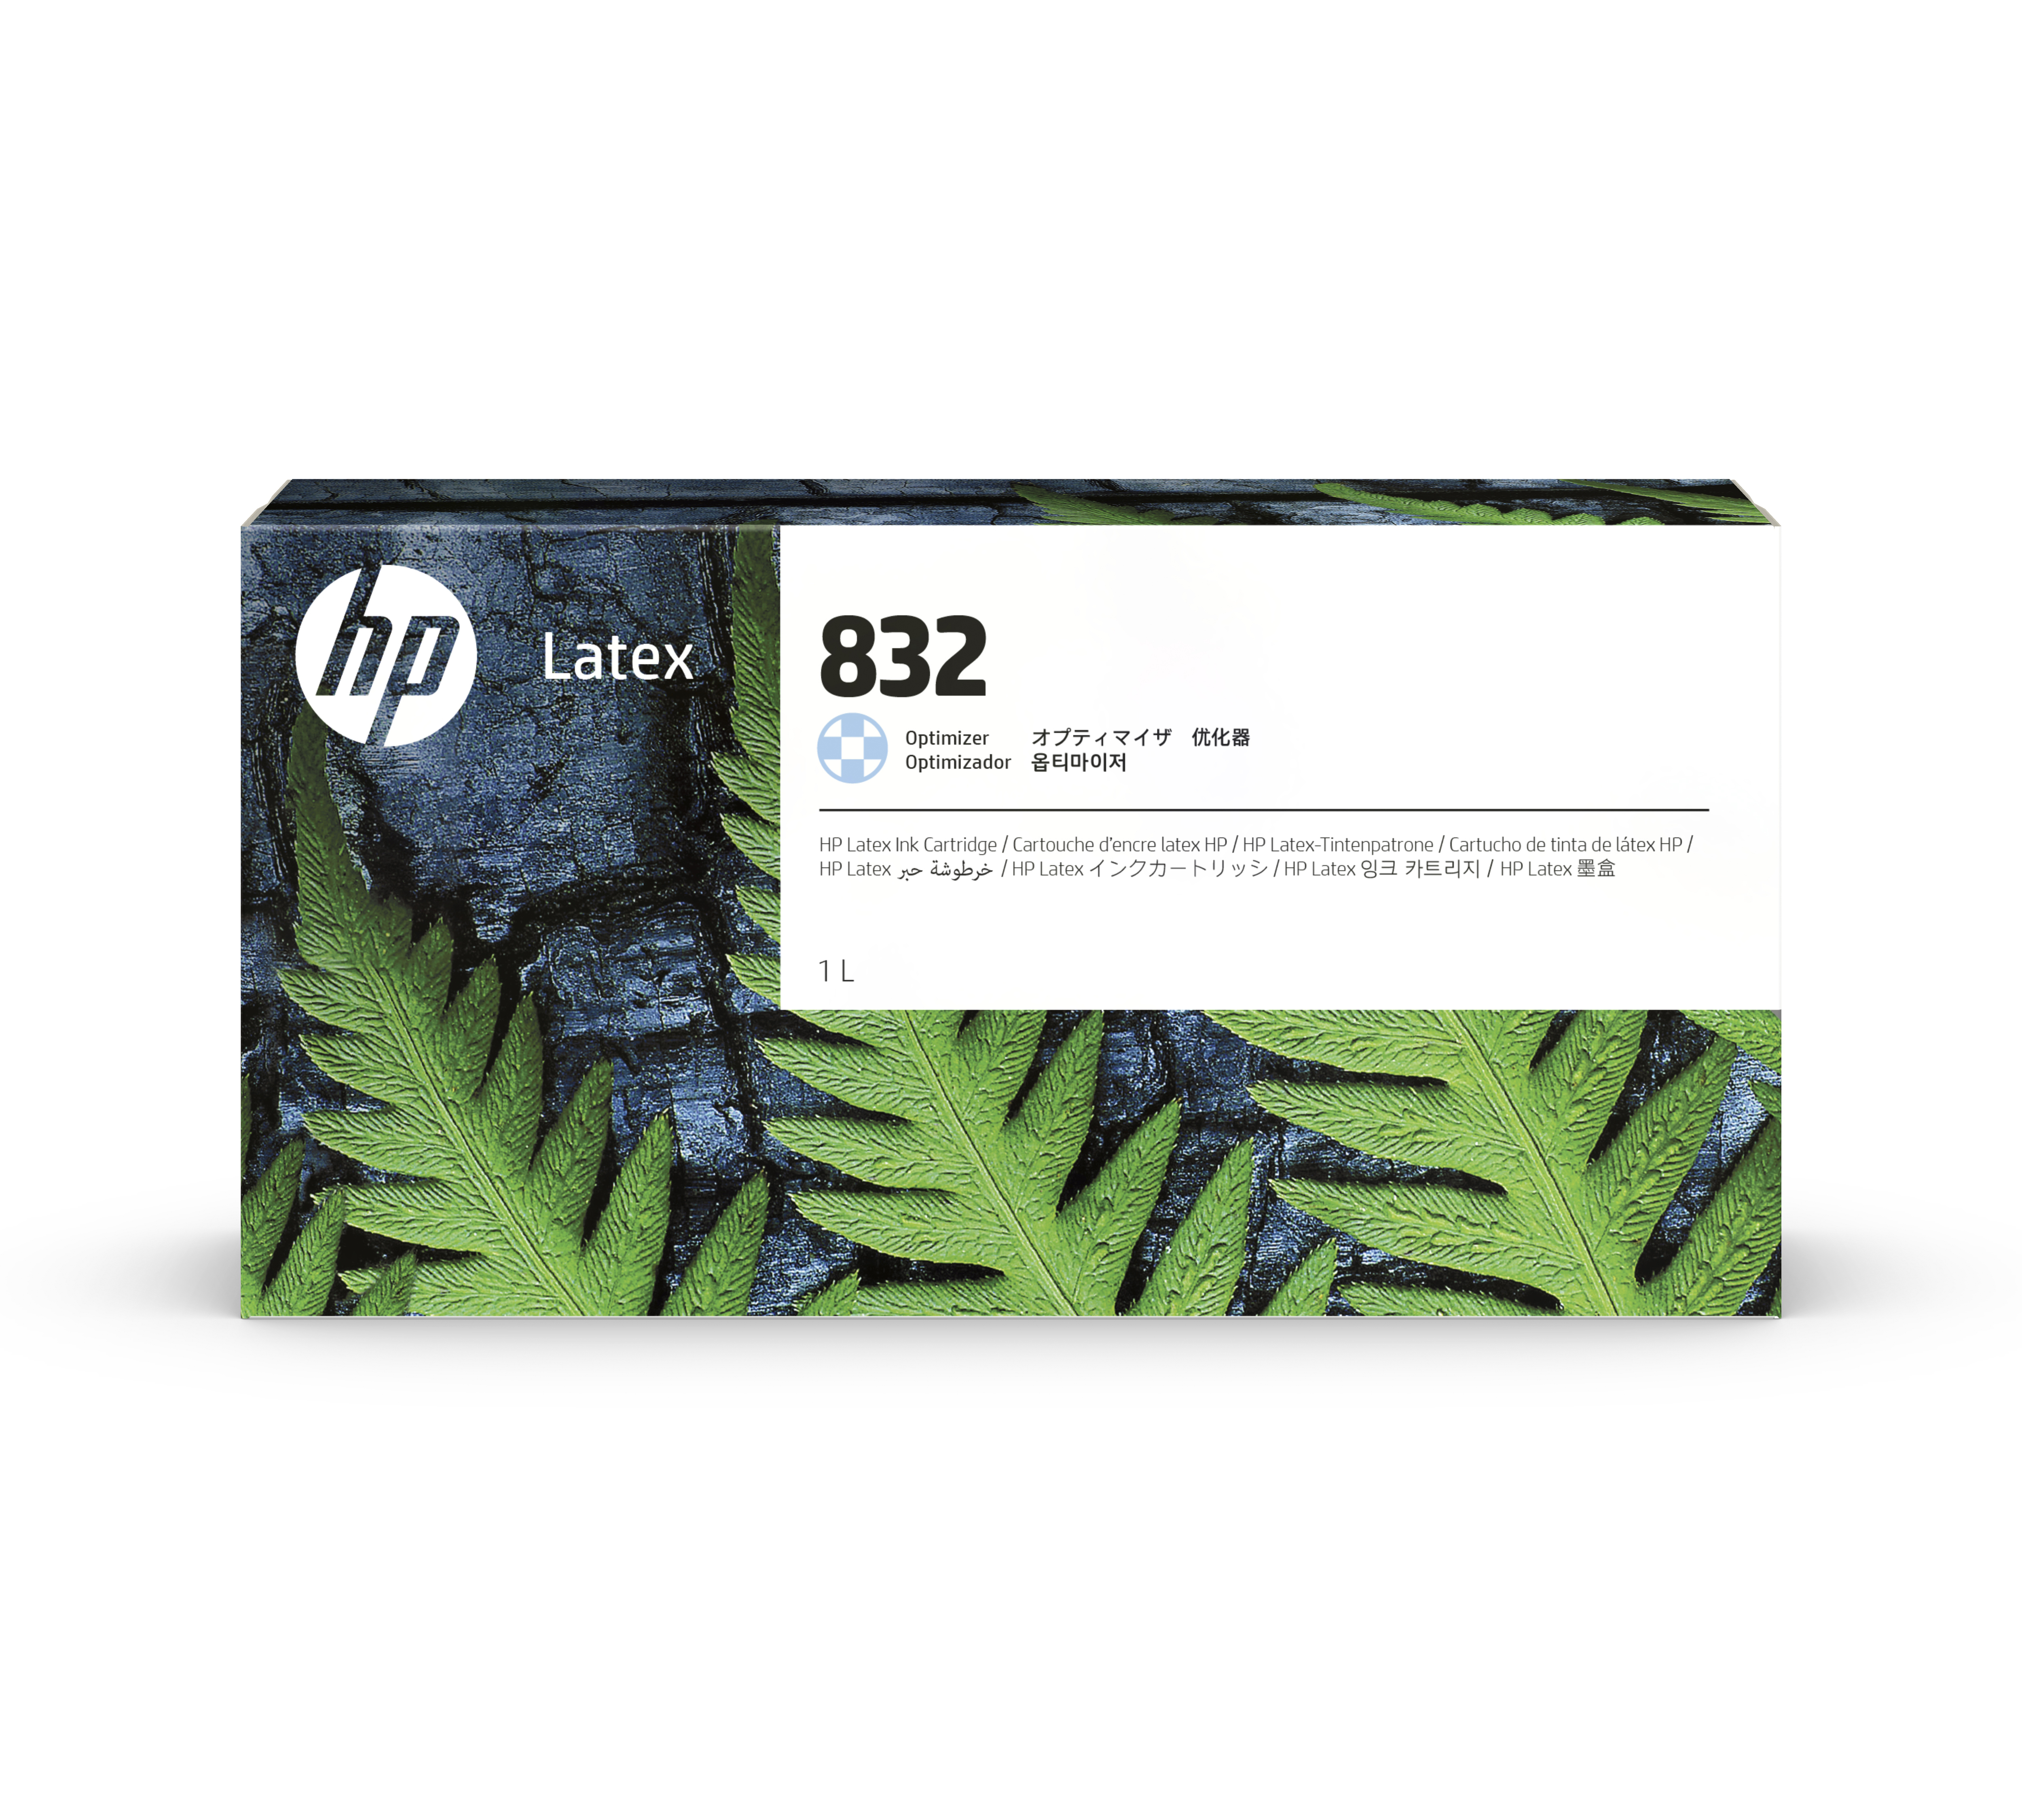 HP 832 Latex Tinte Optimizer / Optimierer - 1 Liter